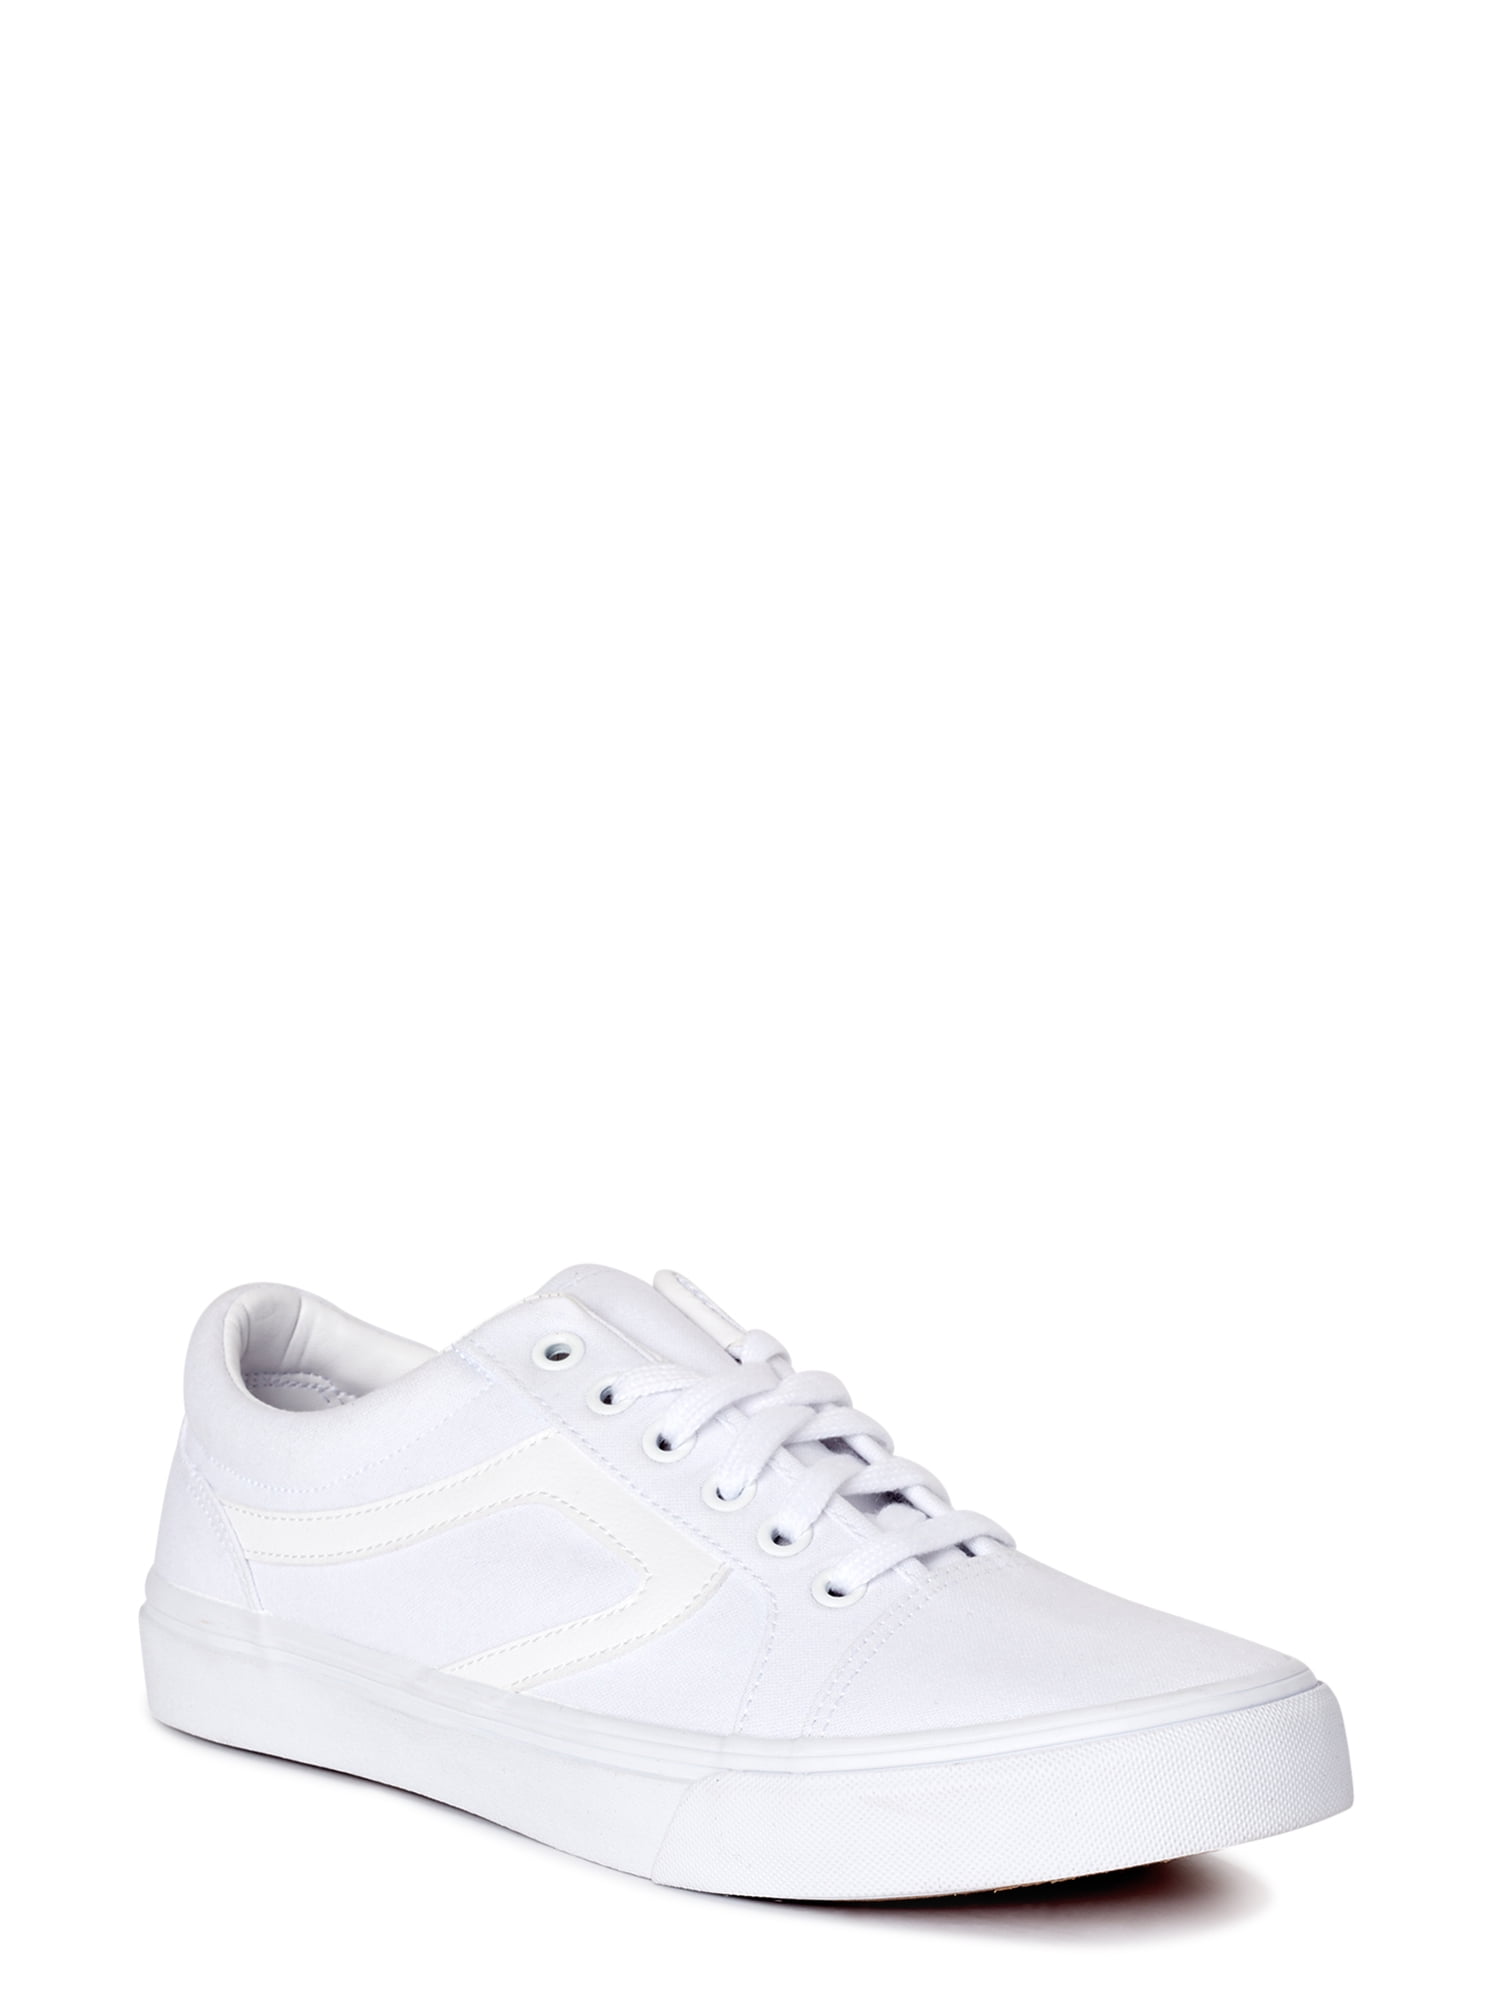 white tennis shoes at walmart